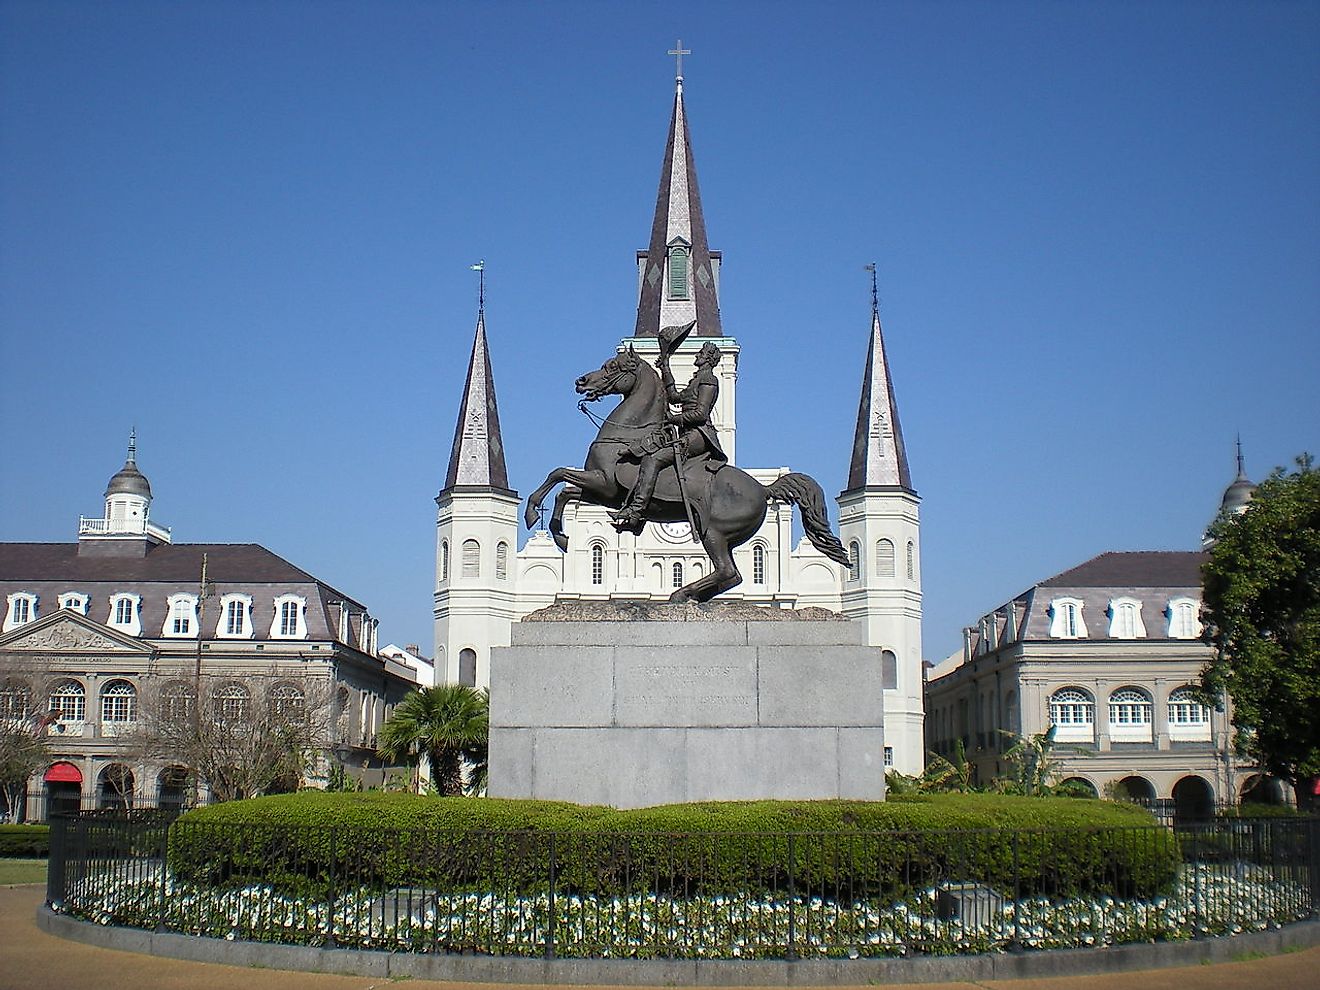 Jackson Square - New Orleans. Image credit: Sami99tr/Wikimedia.org